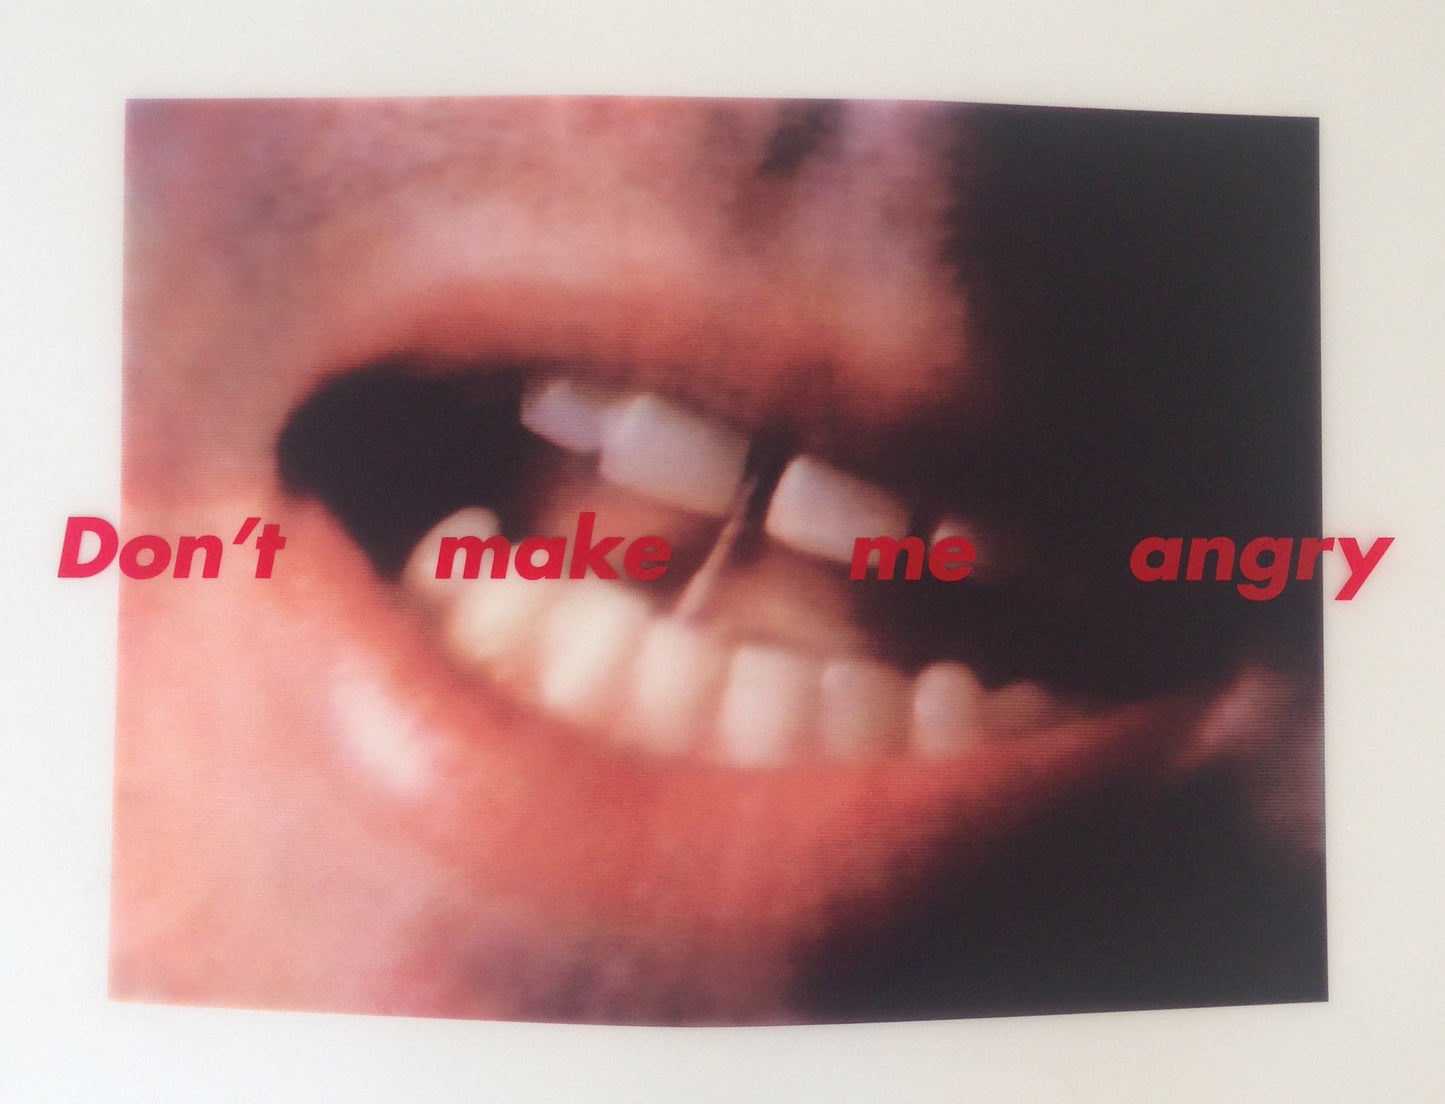 Barbara Kruger - Don't make me angry, 1999